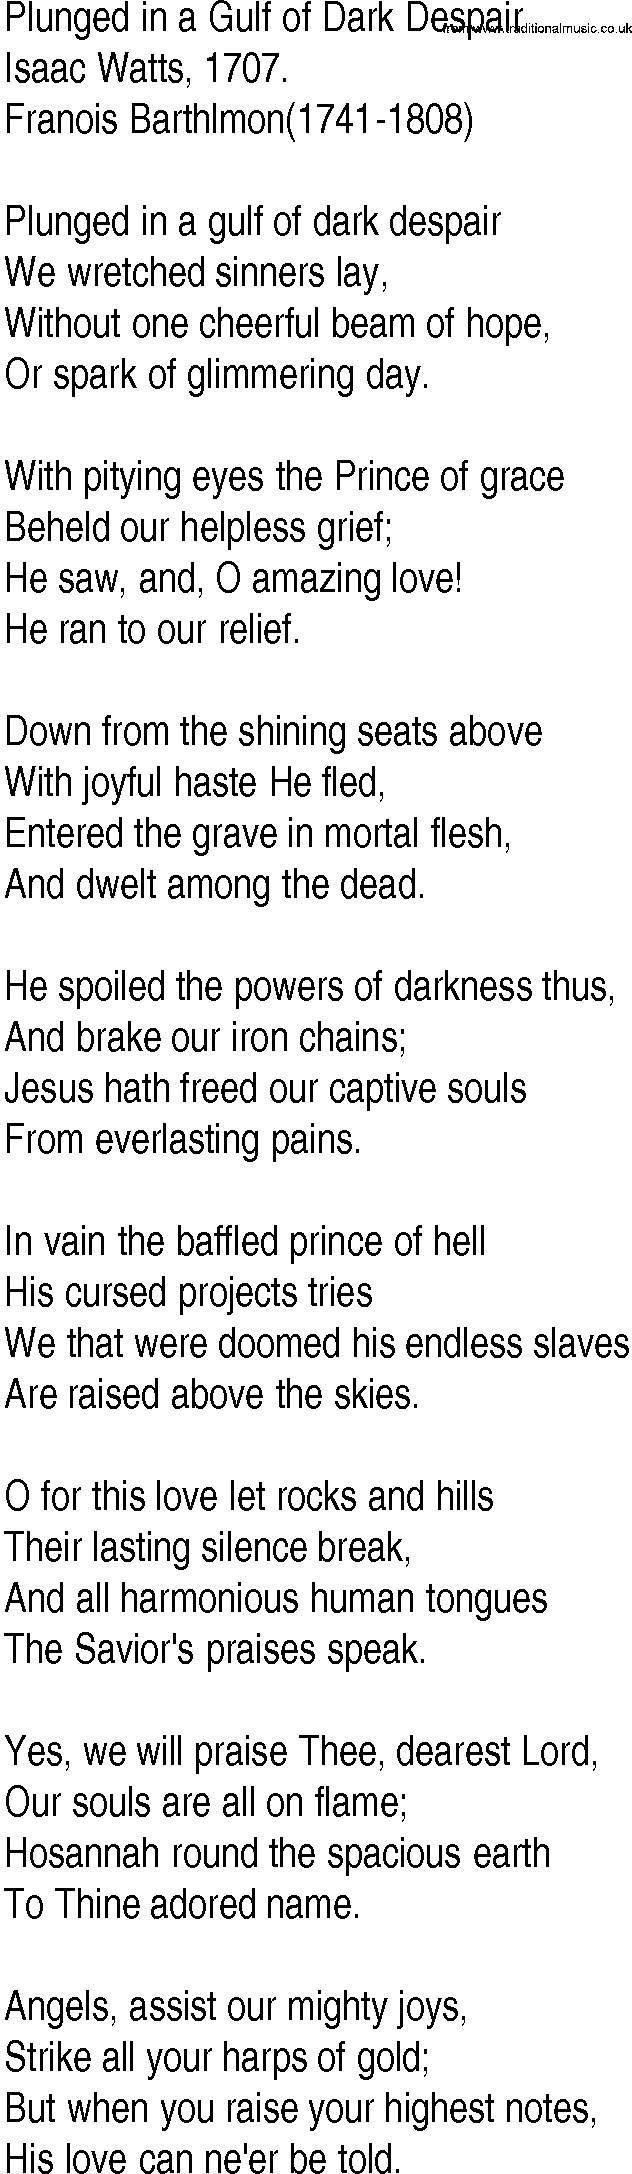 Hymn and Gospel Song: Plunged in a Gulf of Dark Despair by Isaac Watts lyrics